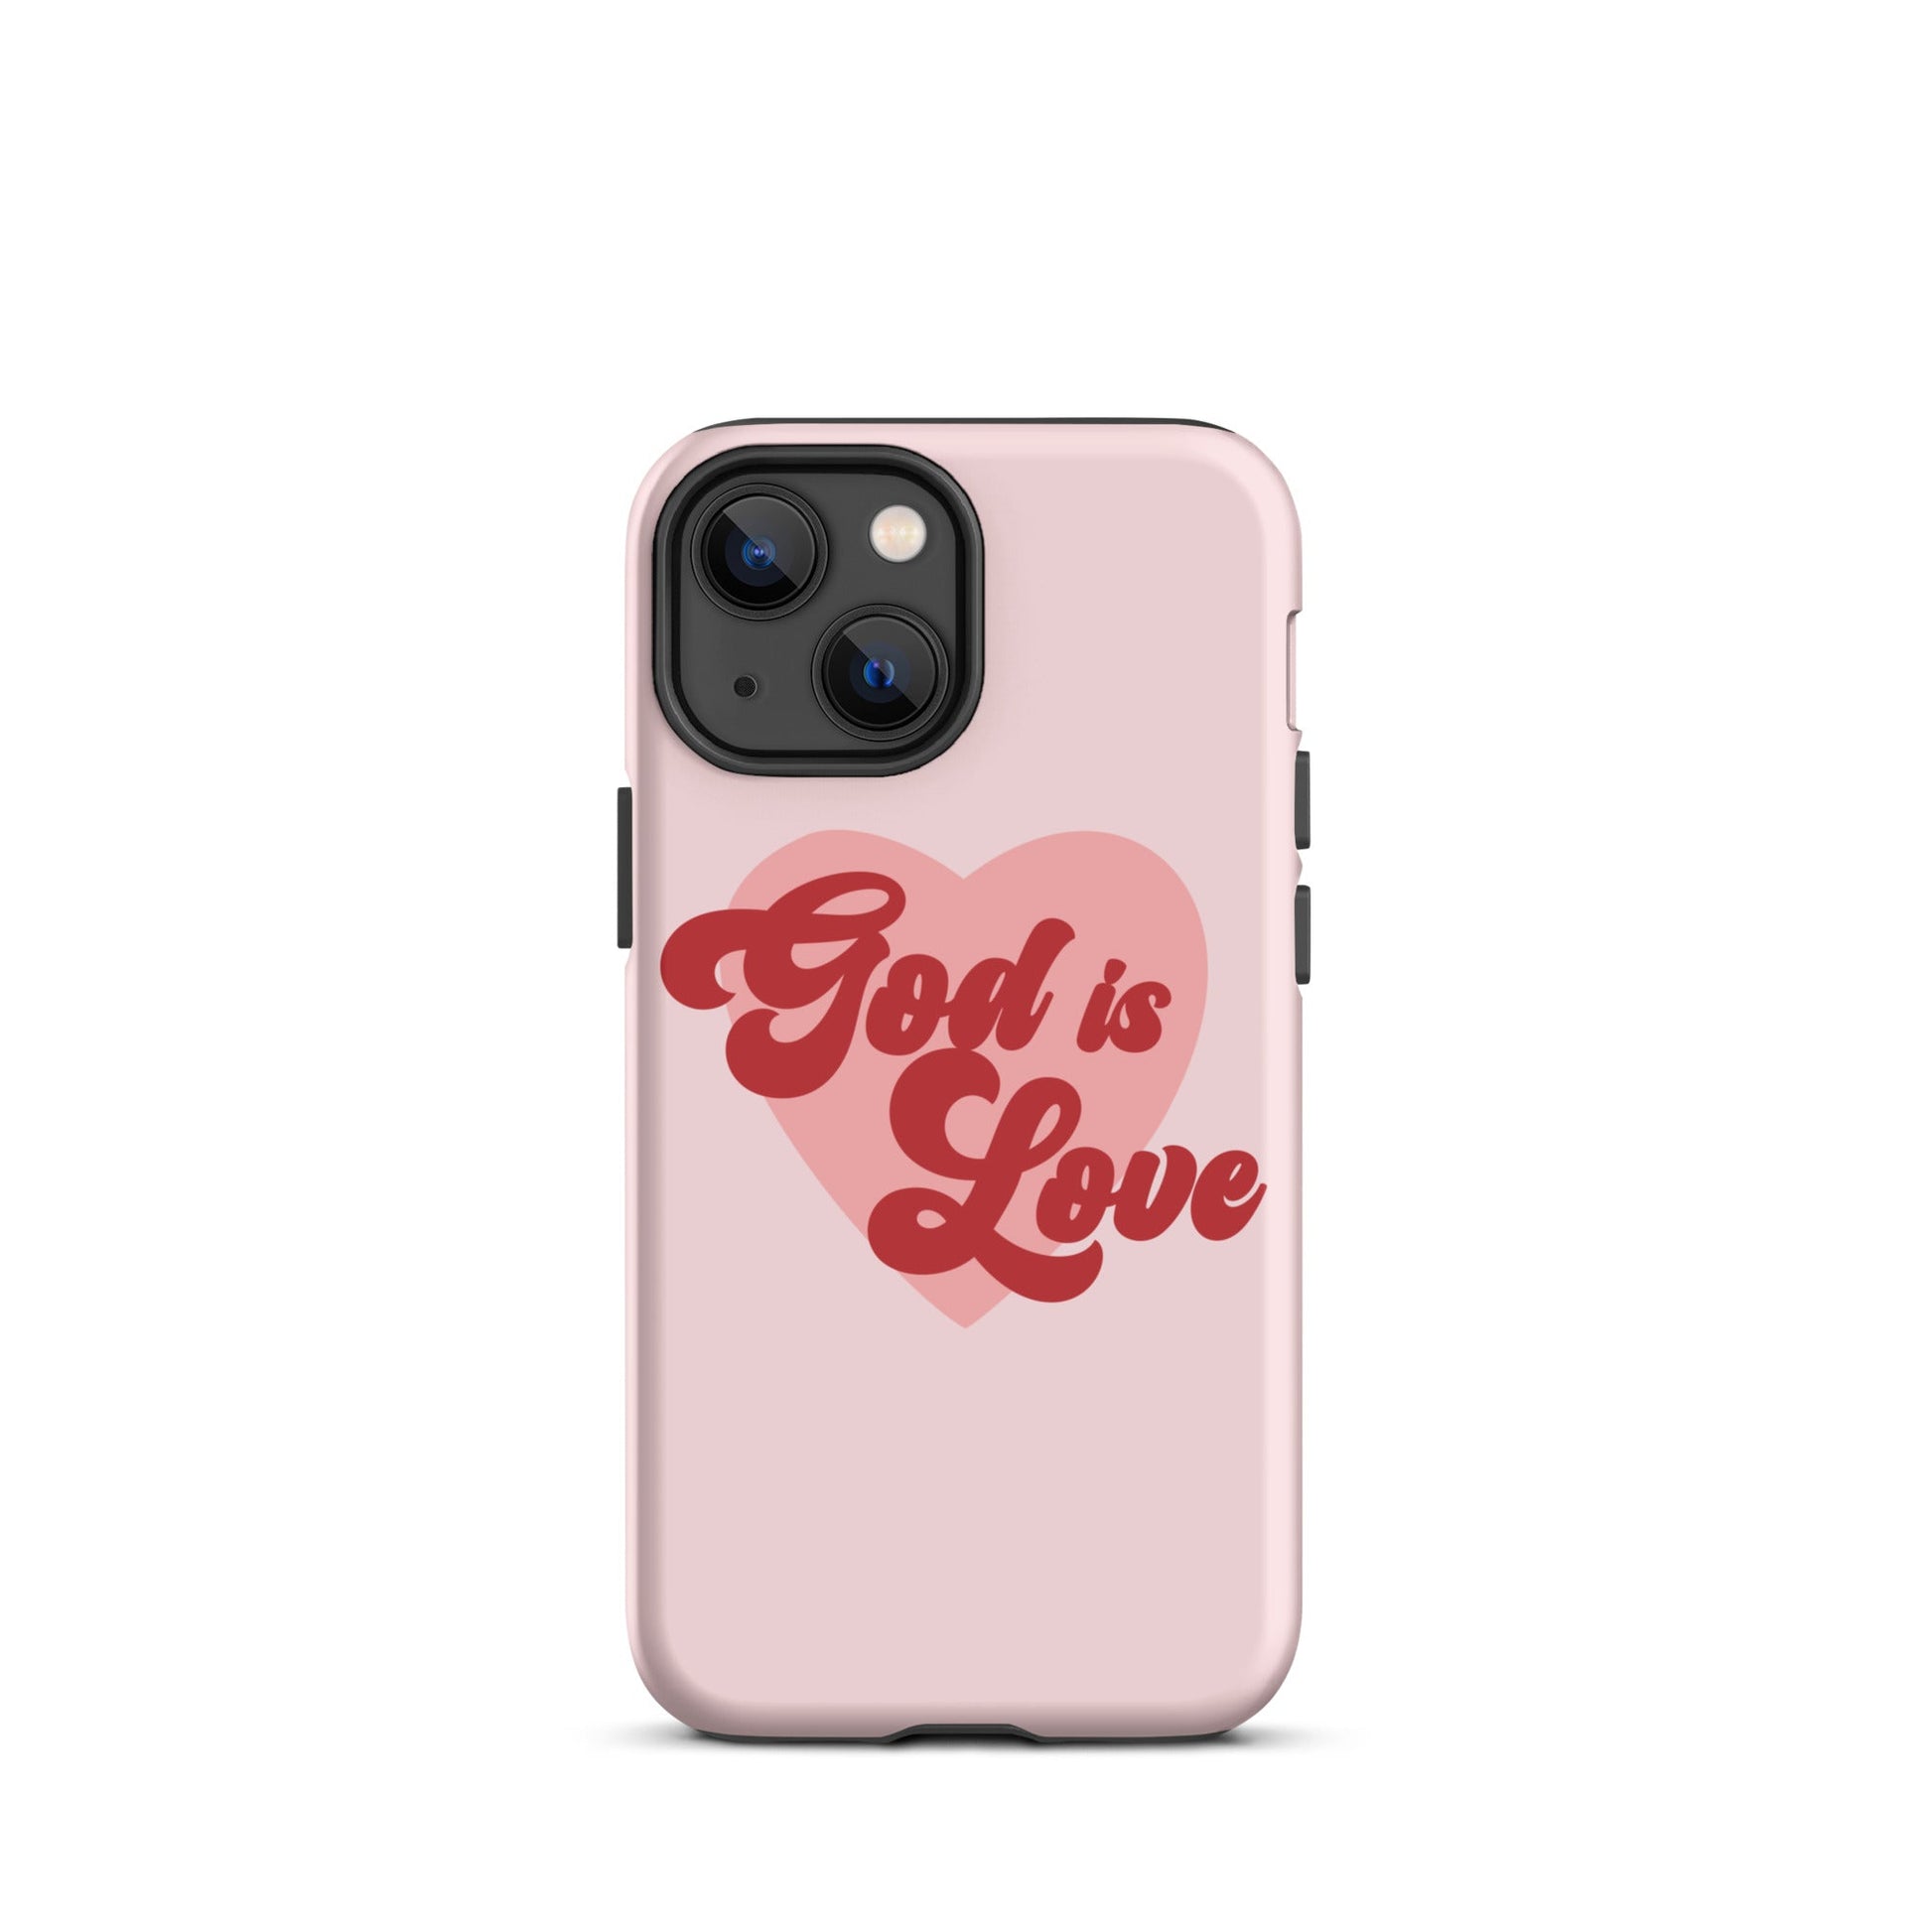 God is Love - Whisper - Tough iPhone case for iPhone 11 Pro Max & Mini, 12 Pro Max & Mini, 13 Pro Max & Mini, 14 Pro Max & Mini - Creation Awaits